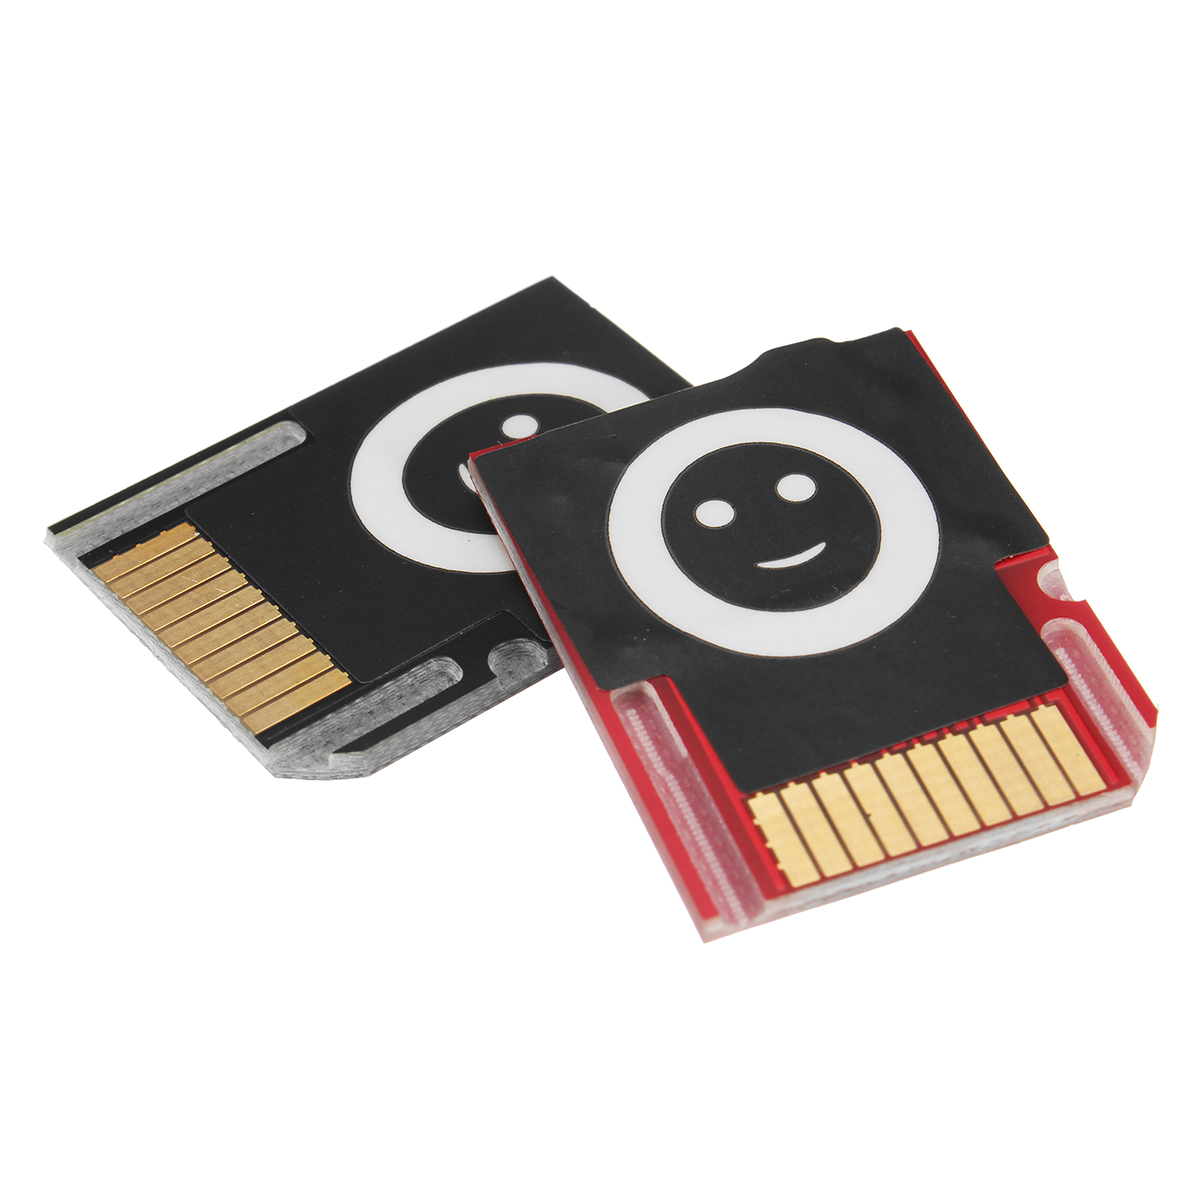 Mini-Game-Card-Cover-Adapter-For-PSVITA-SD2-Vita-PS-Vita-1000-2000-SD-Memory-Card-1207134-1